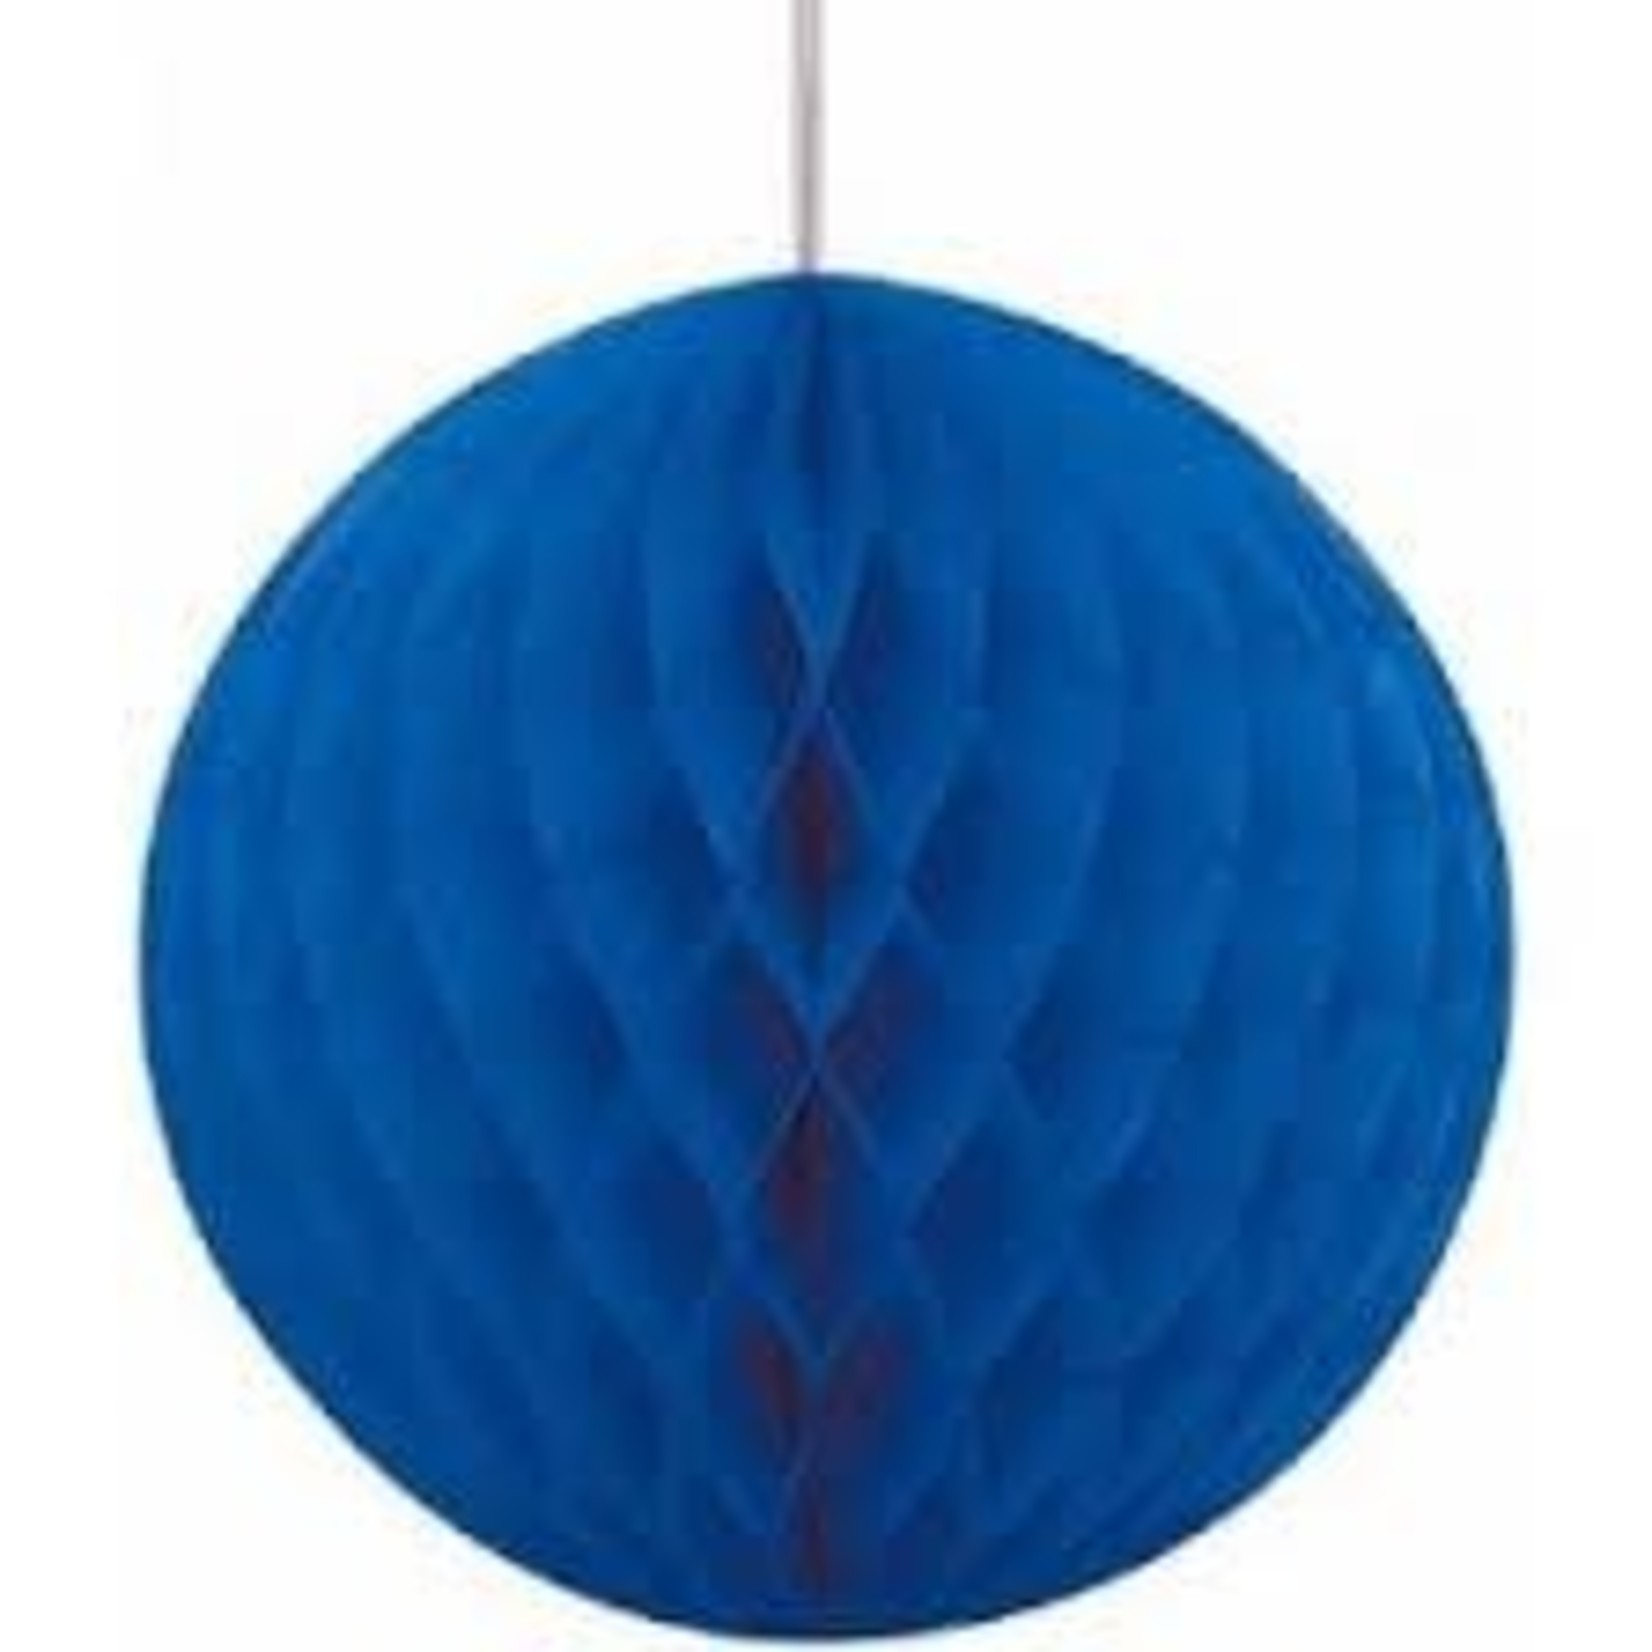 Royal Blue Honeycomb Ball